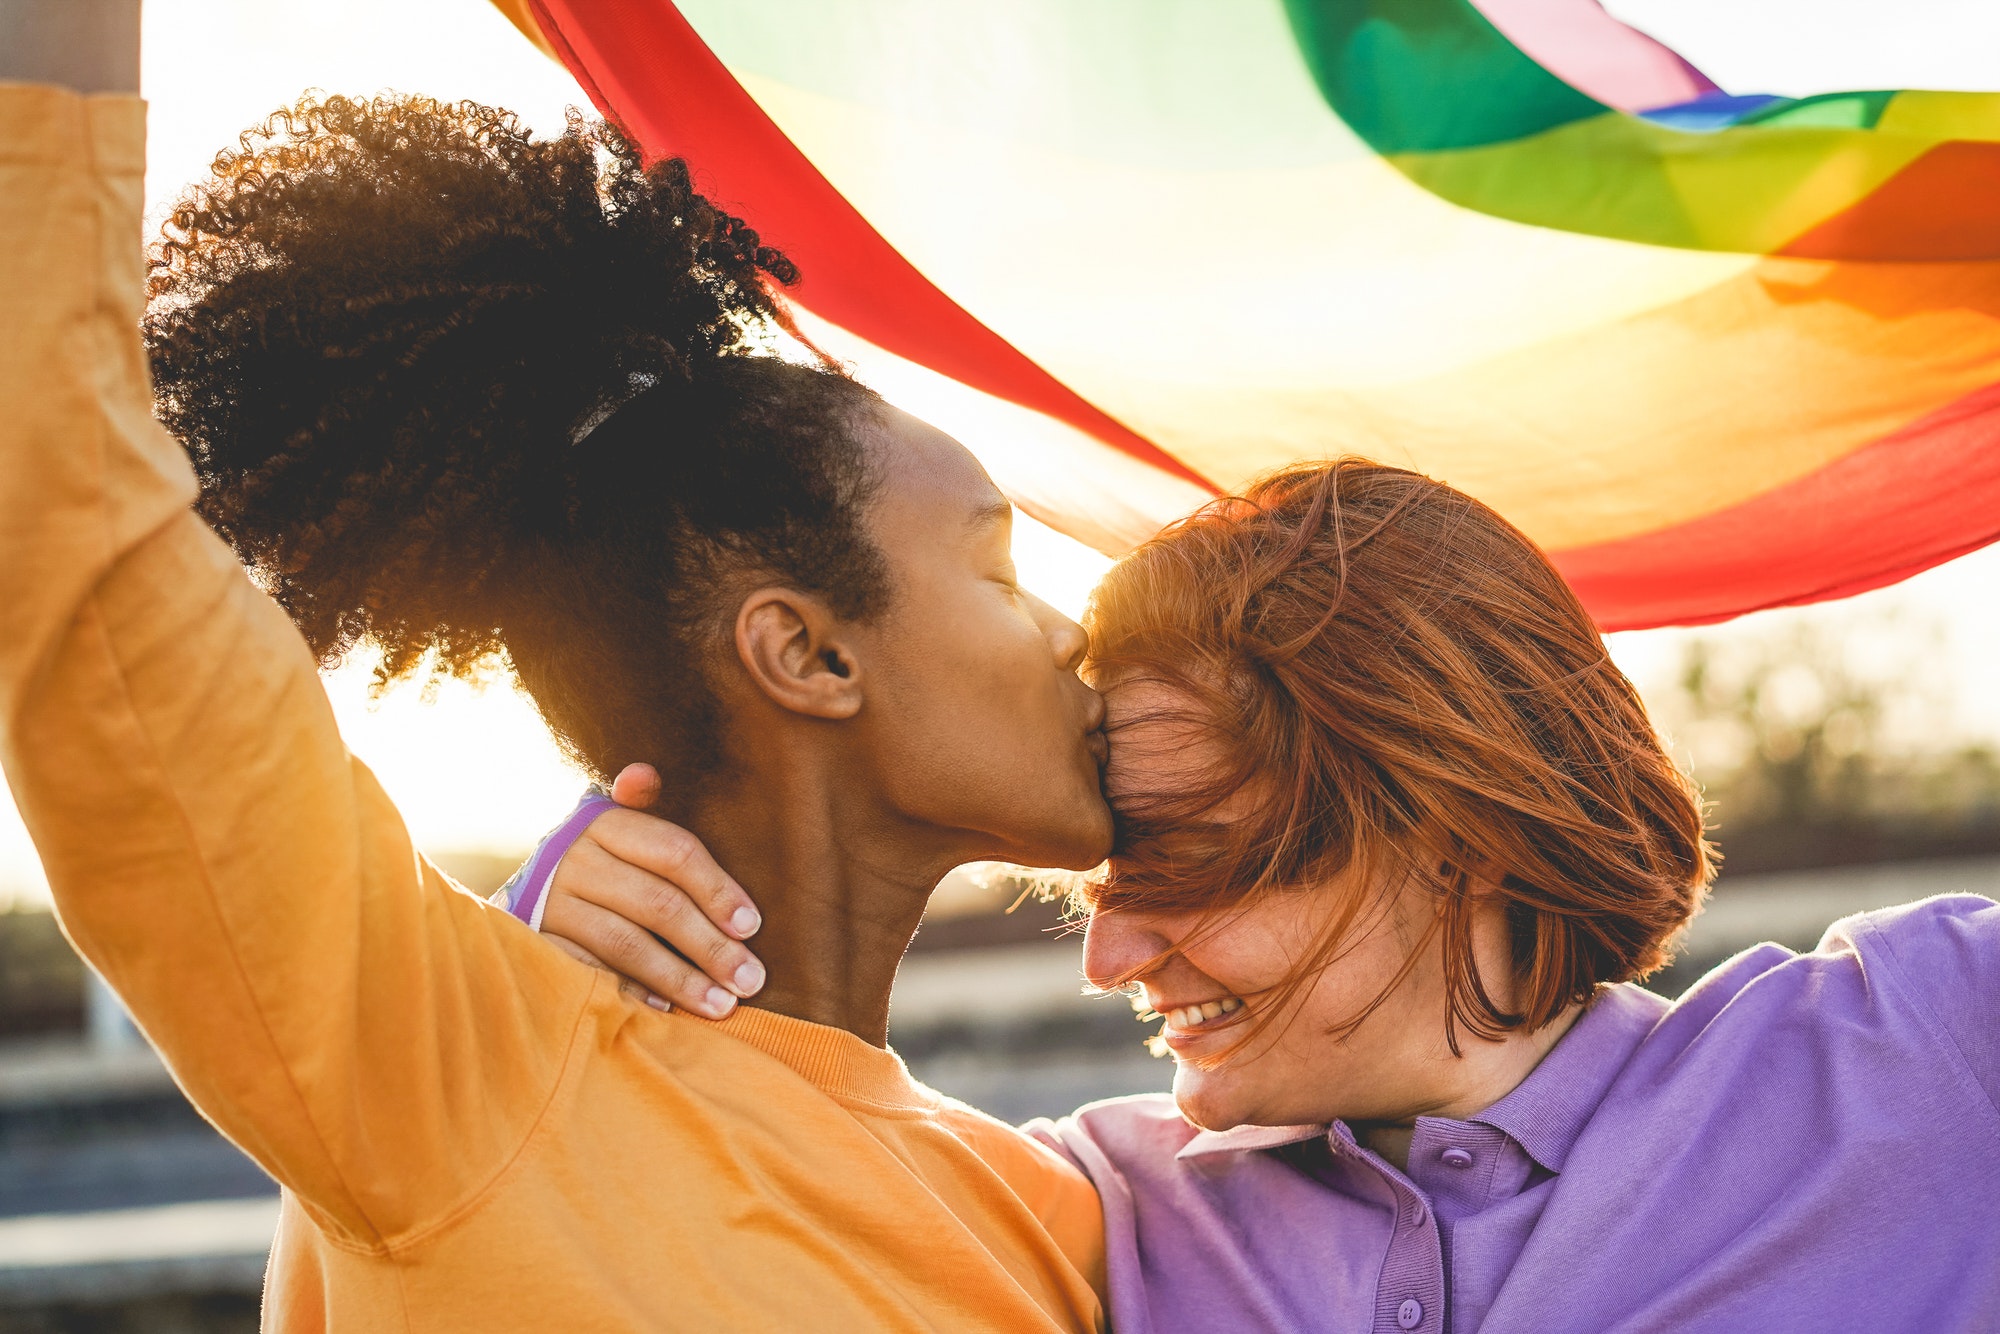 Happy women gay couple having tender moment holding rainbow flag outdoor